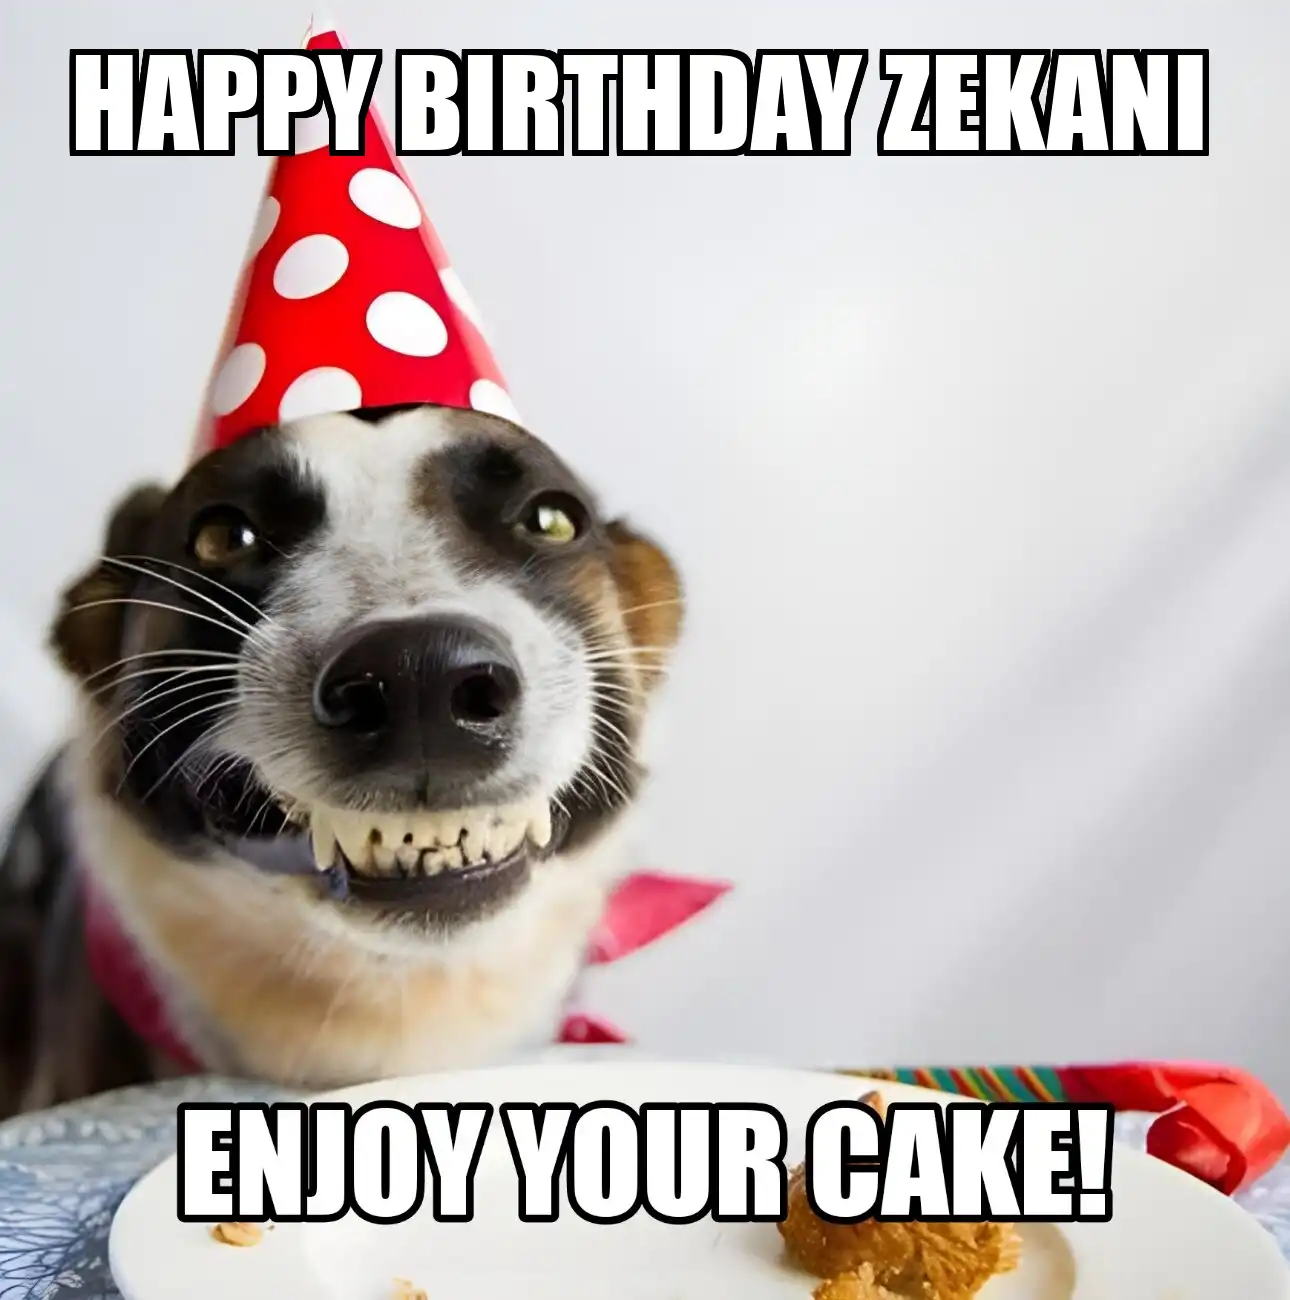 Happy Birthday Zekani Enjoy Your Cake Dog Meme